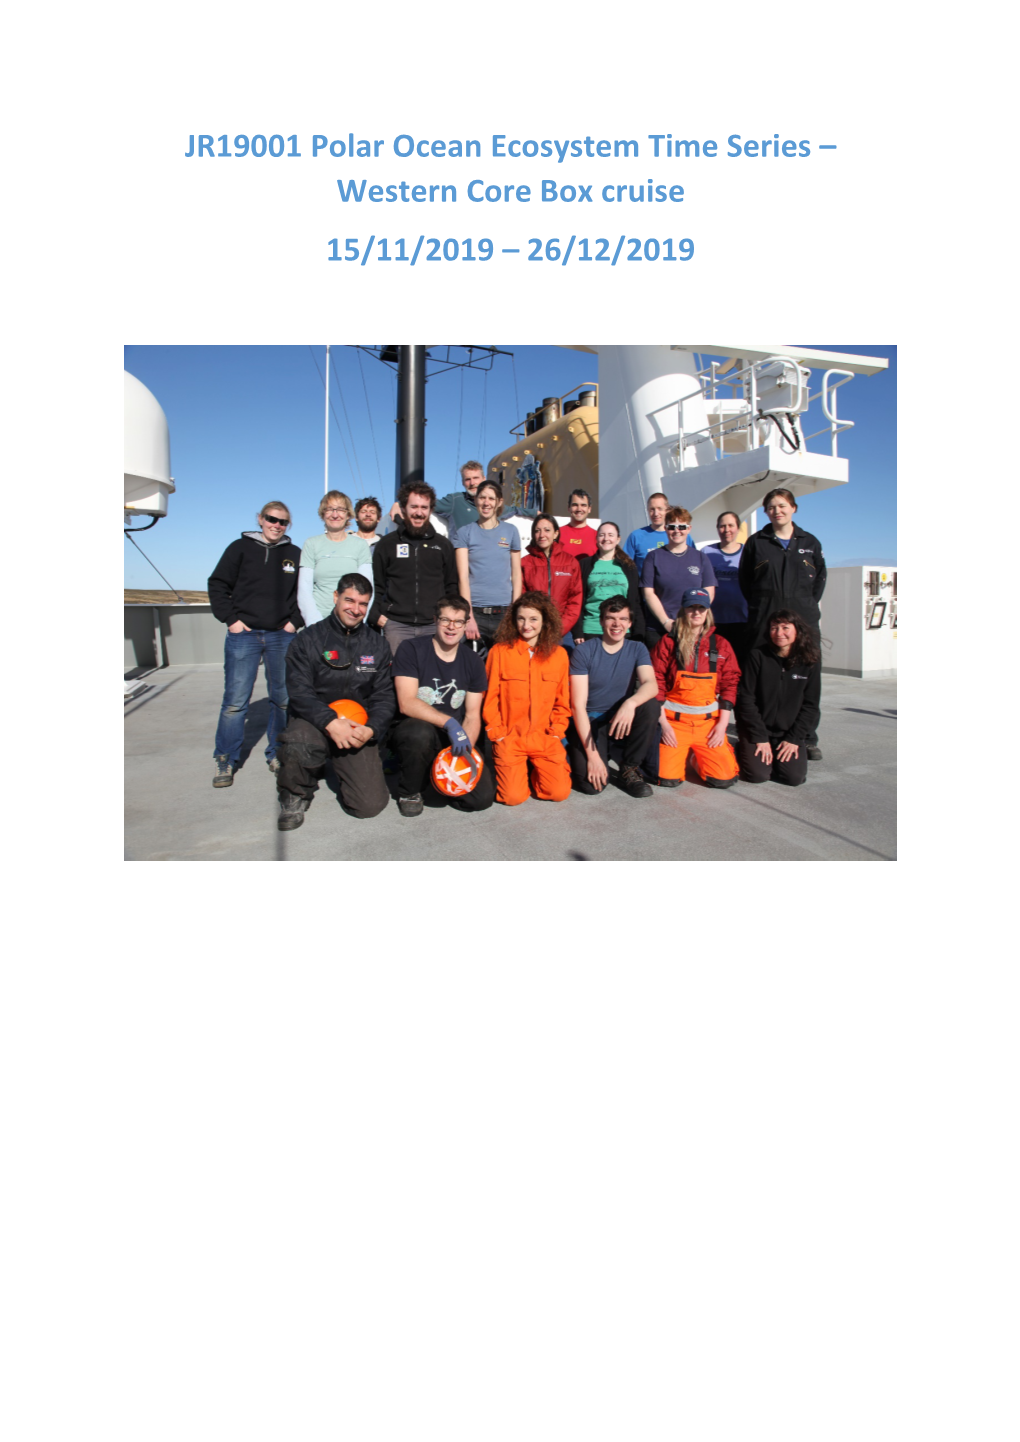 JR19001 Polar Ocean Ecosystem Time Series – Western Core Box Cruise 15/11/2019 – 26/12/2019